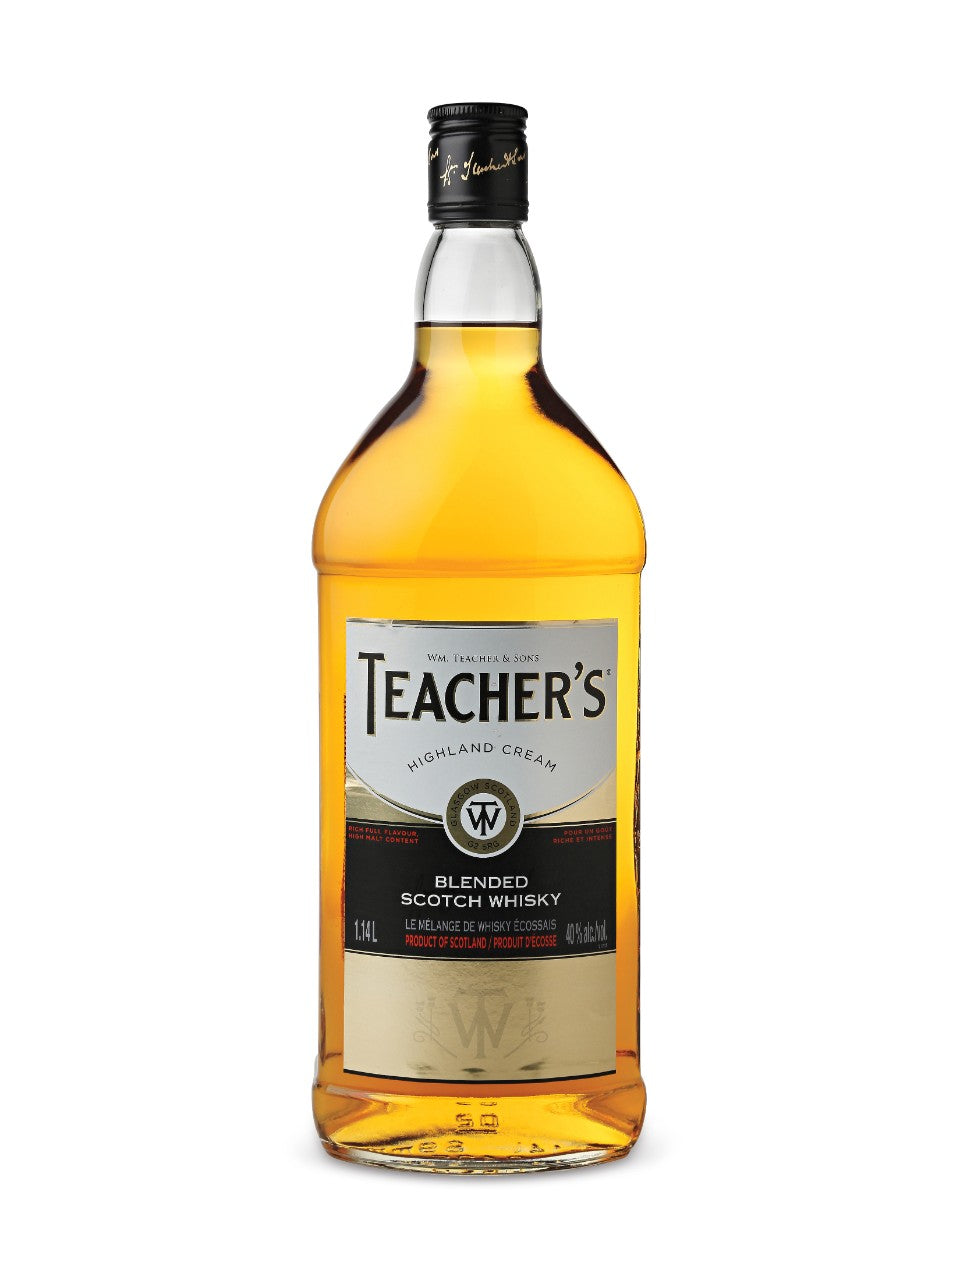 Teacher's Highland Scotch Whisky 1140 mL bottle